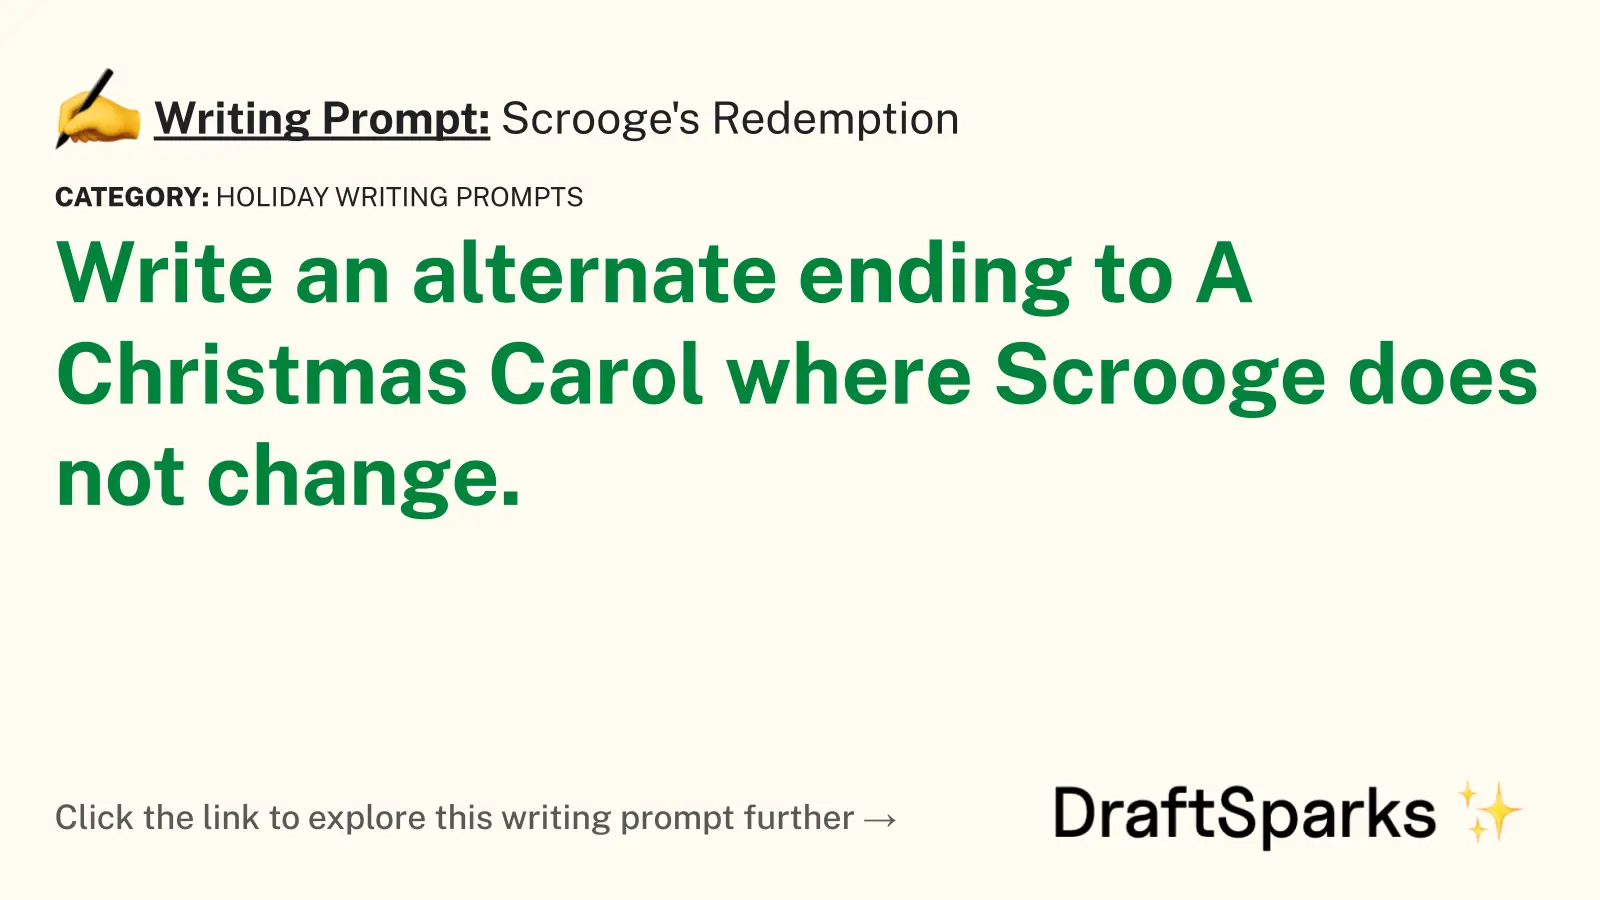 Scrooge’s Redemption